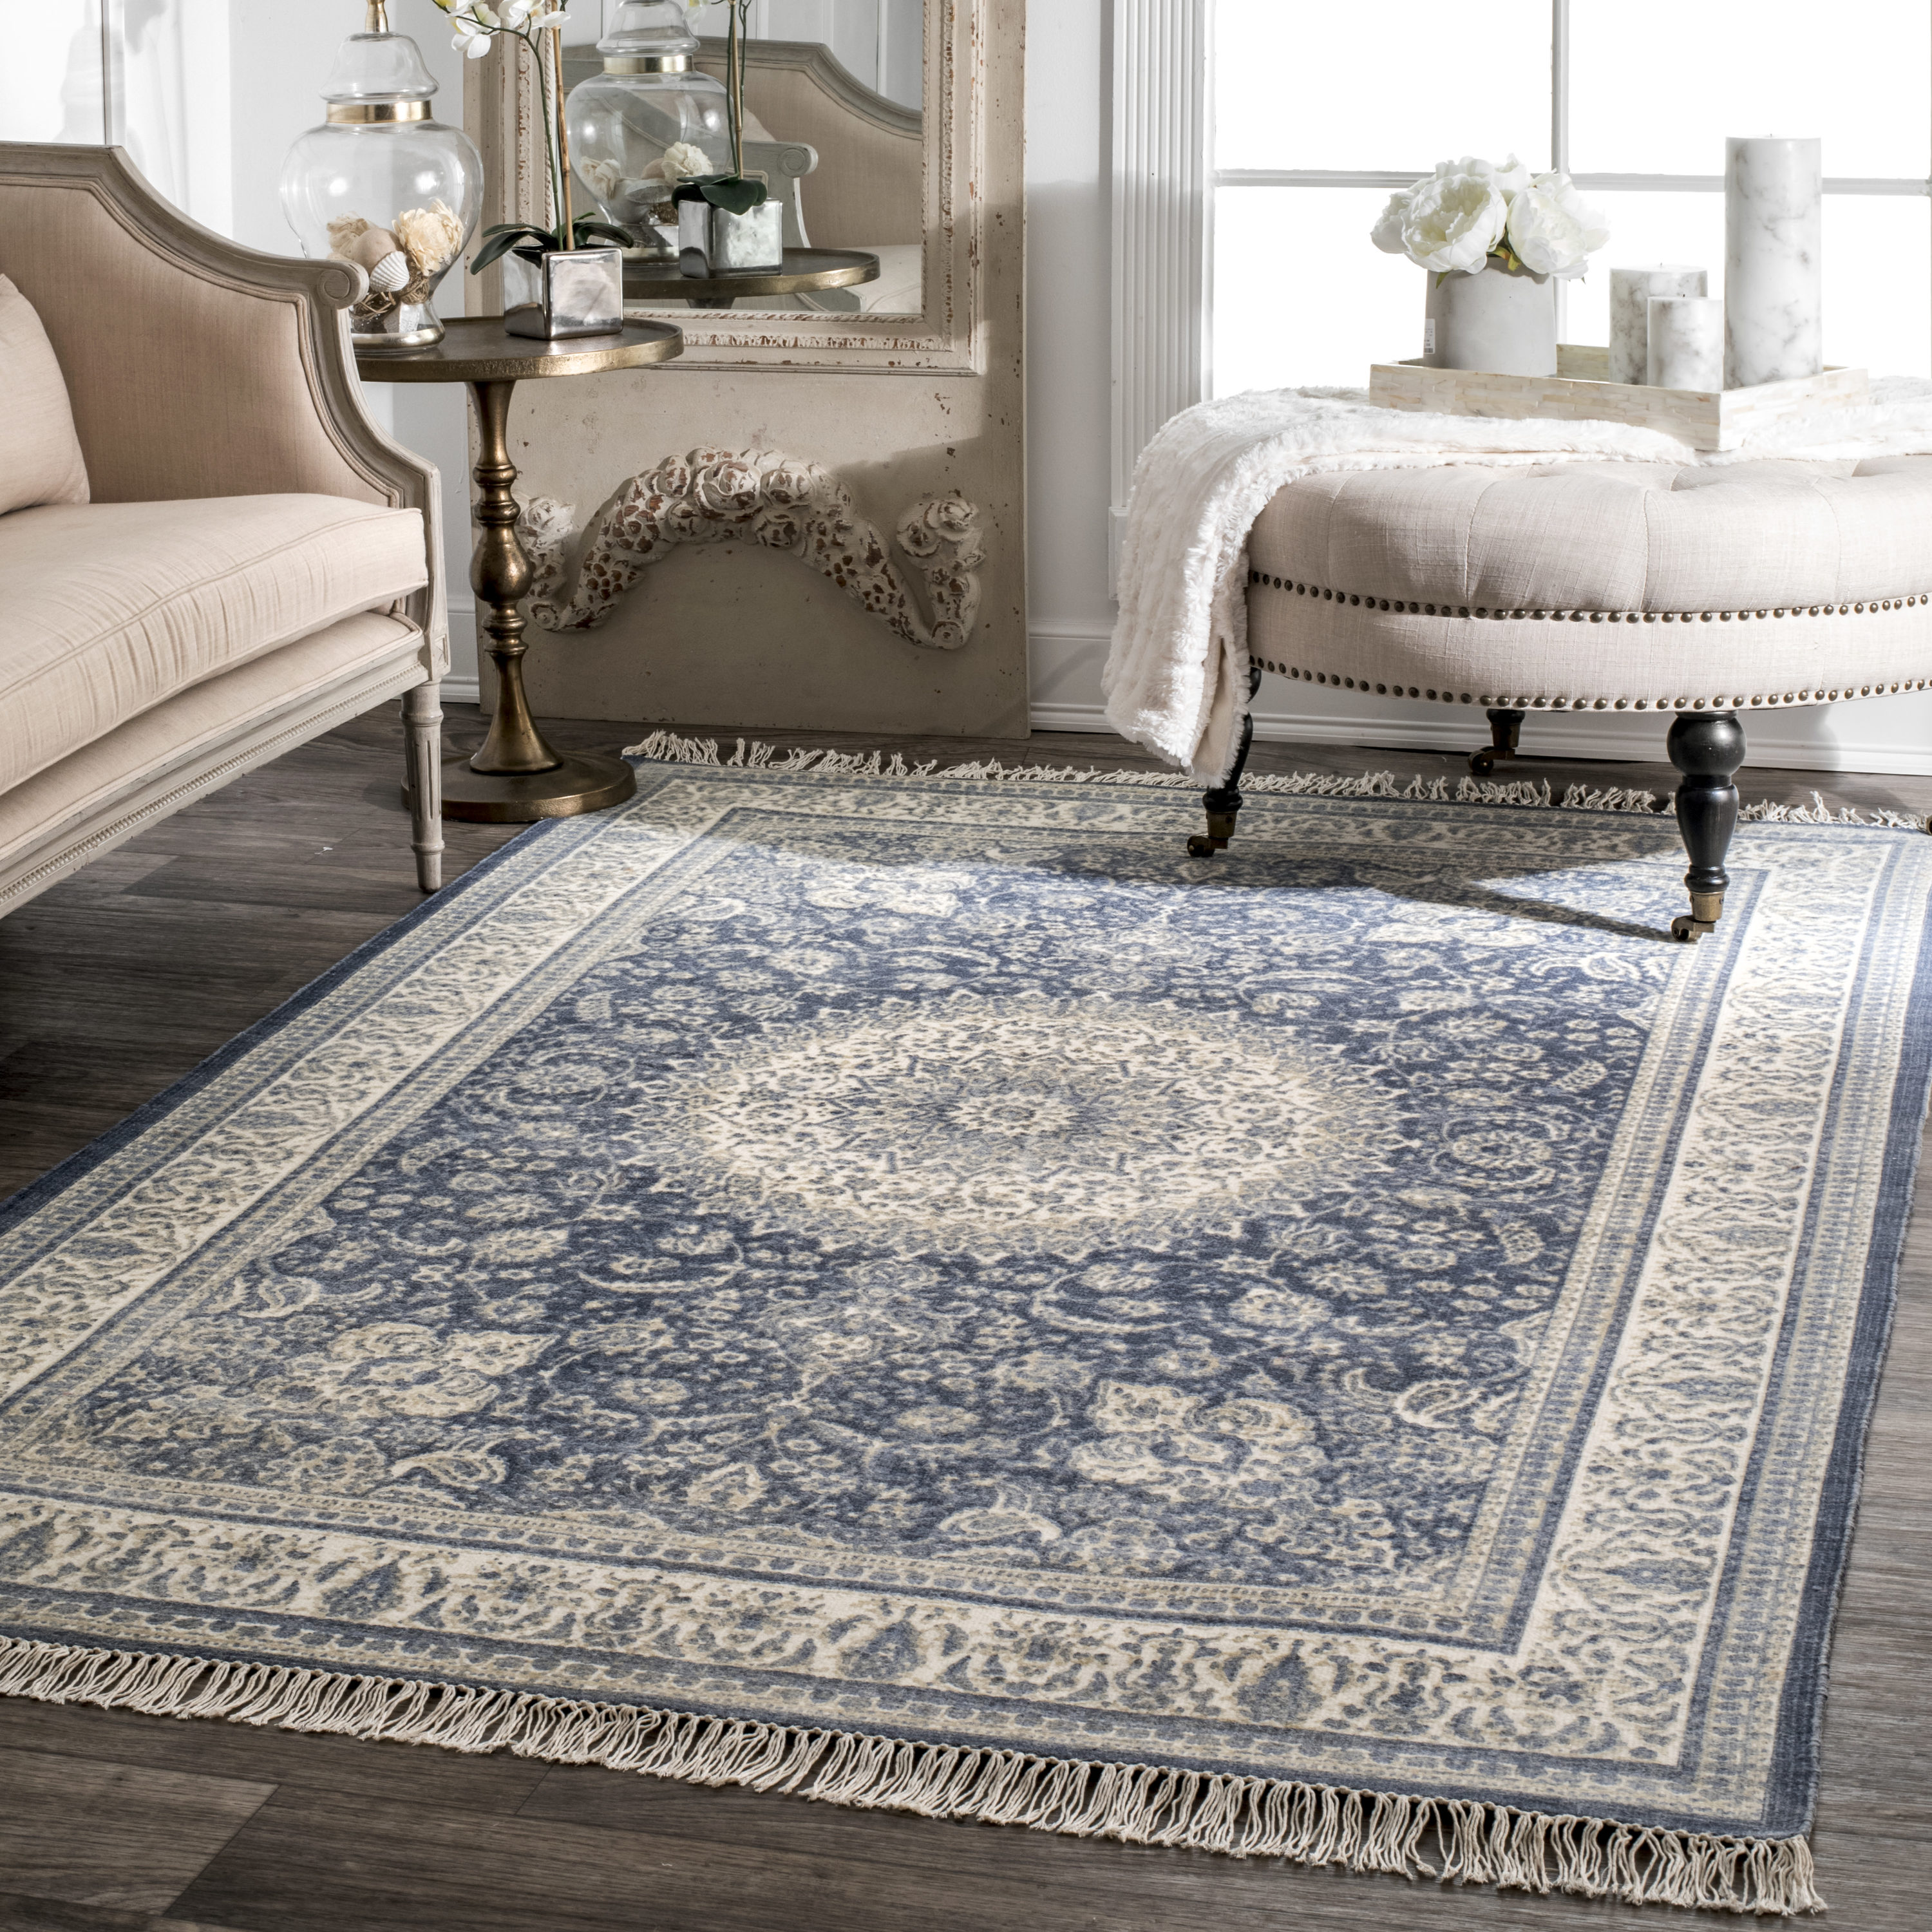 Cotton Linen Area Rug with Tassel Persian Carpet Original Design